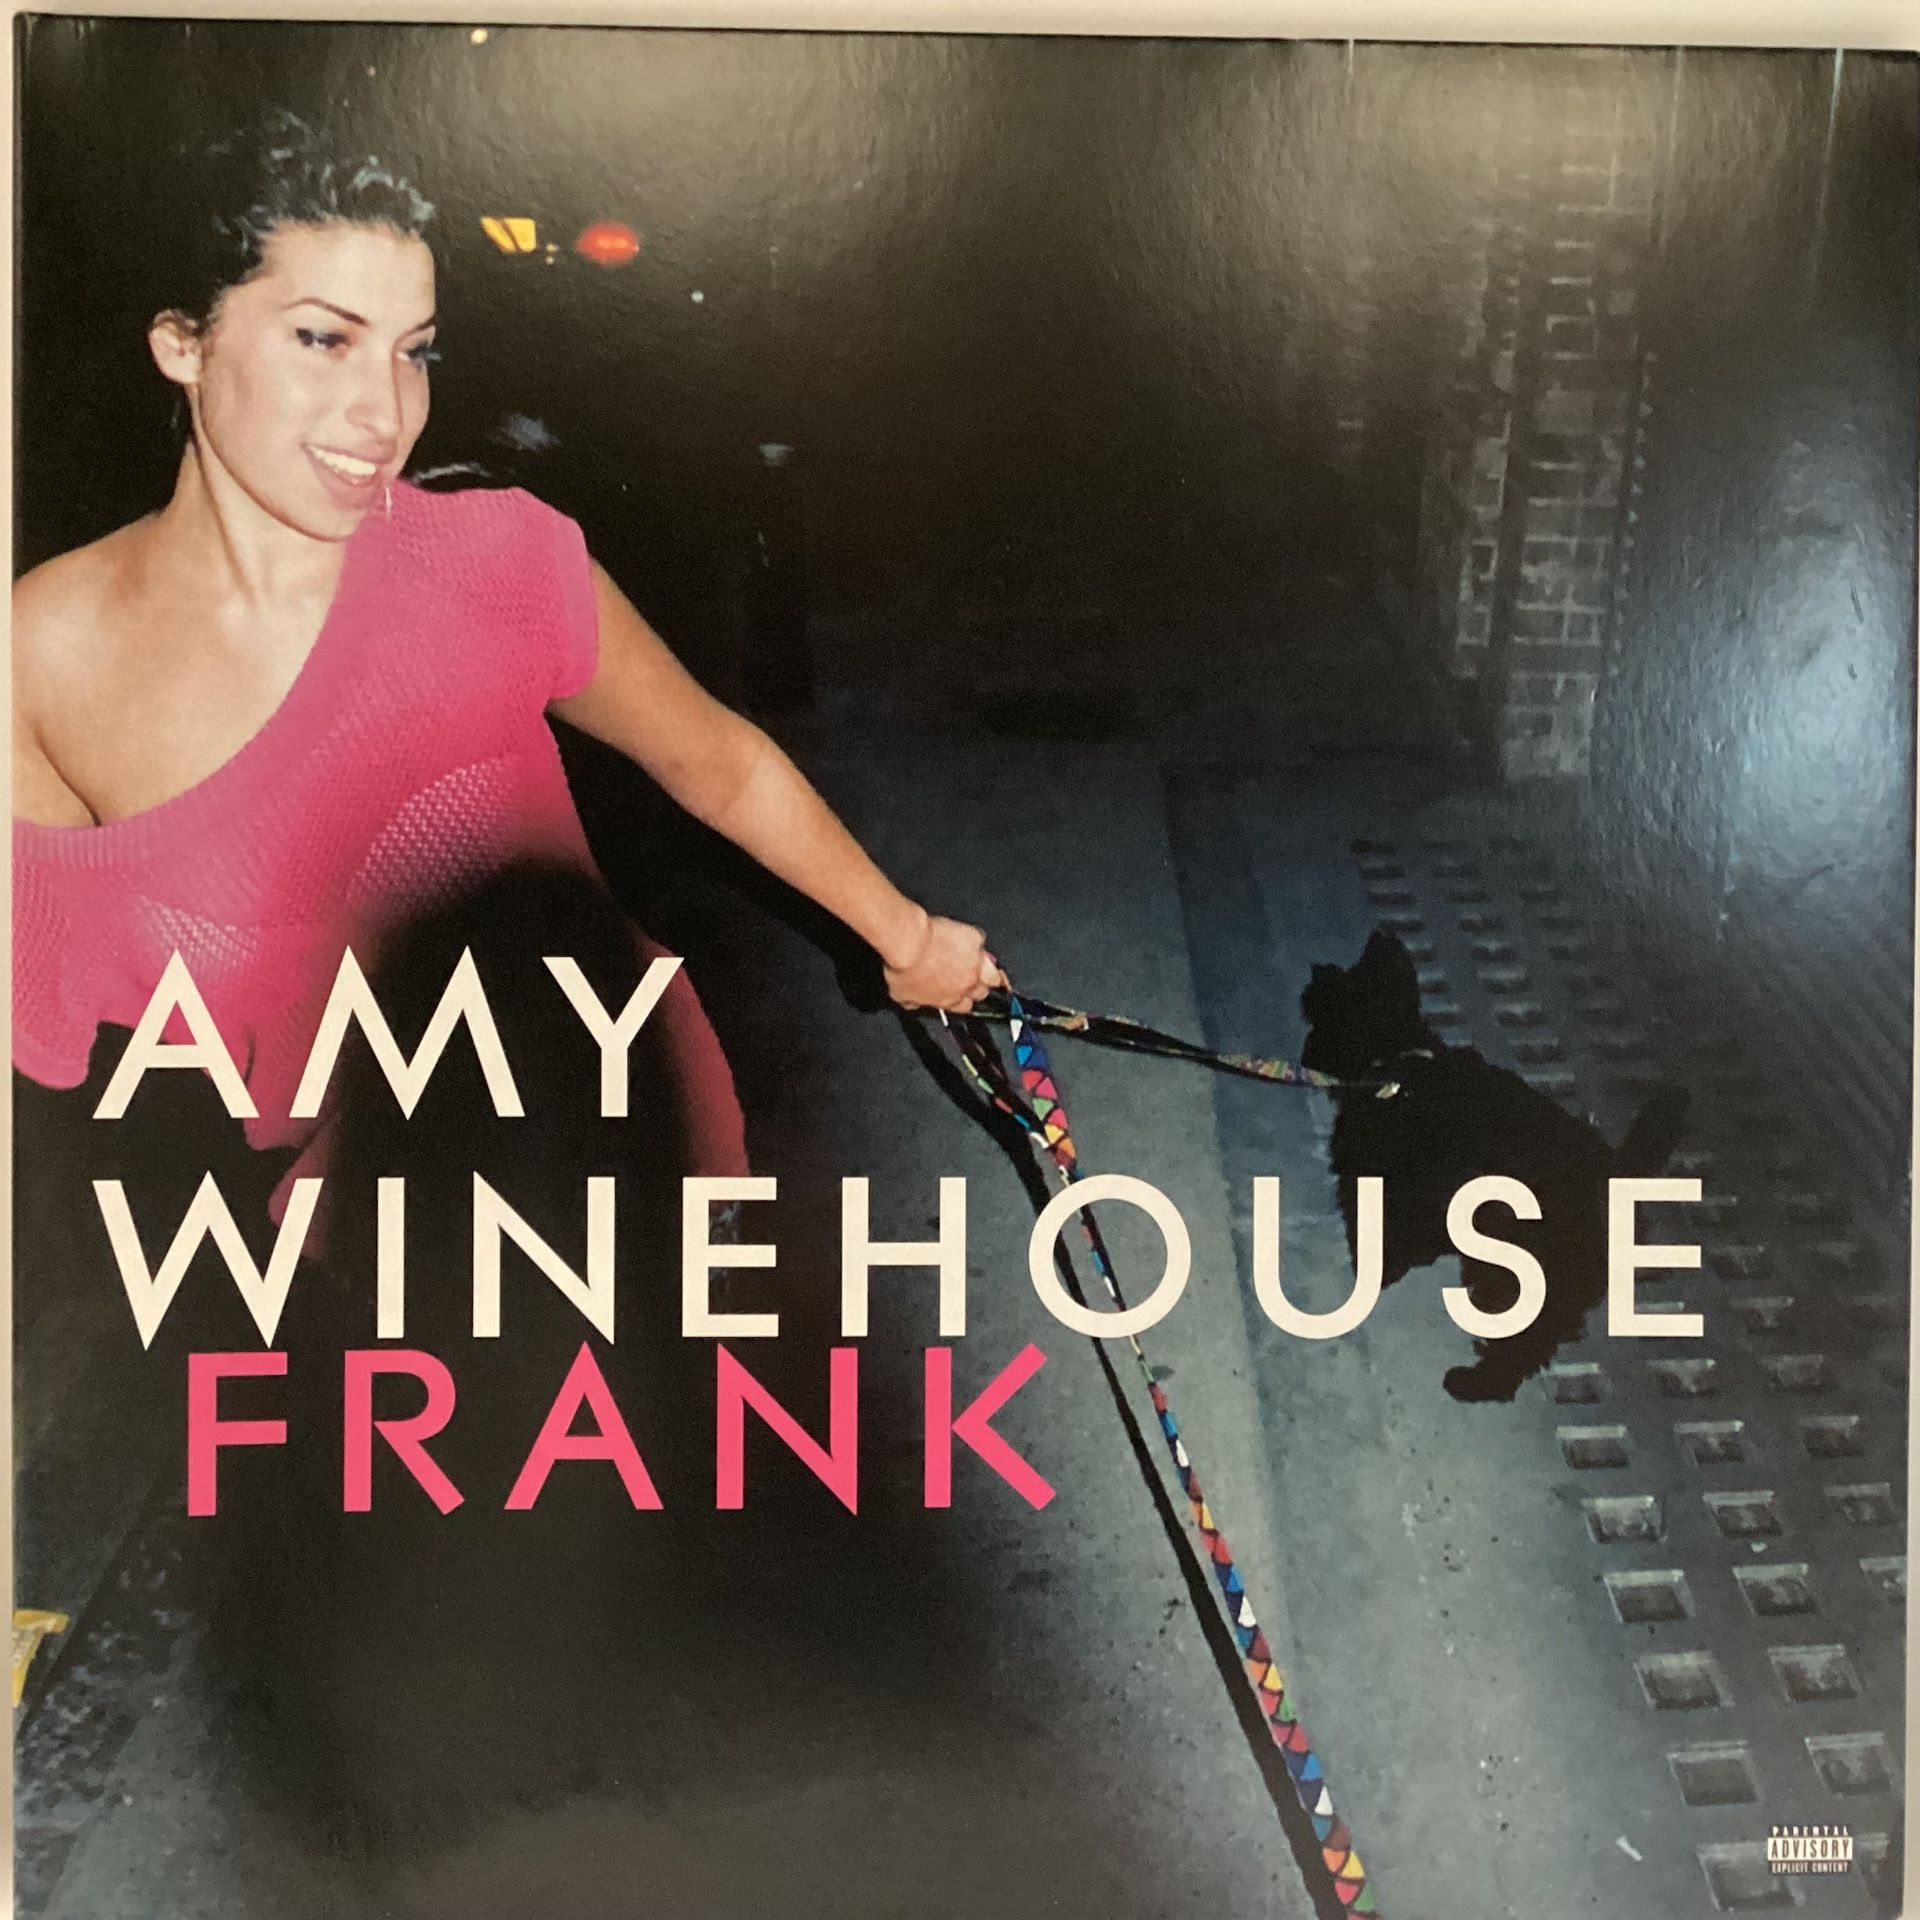 AMY WINEHOUSE VINYL ALBUM ‘FRANK’. Gatefold sleeved album found here on Island Records from 2003.